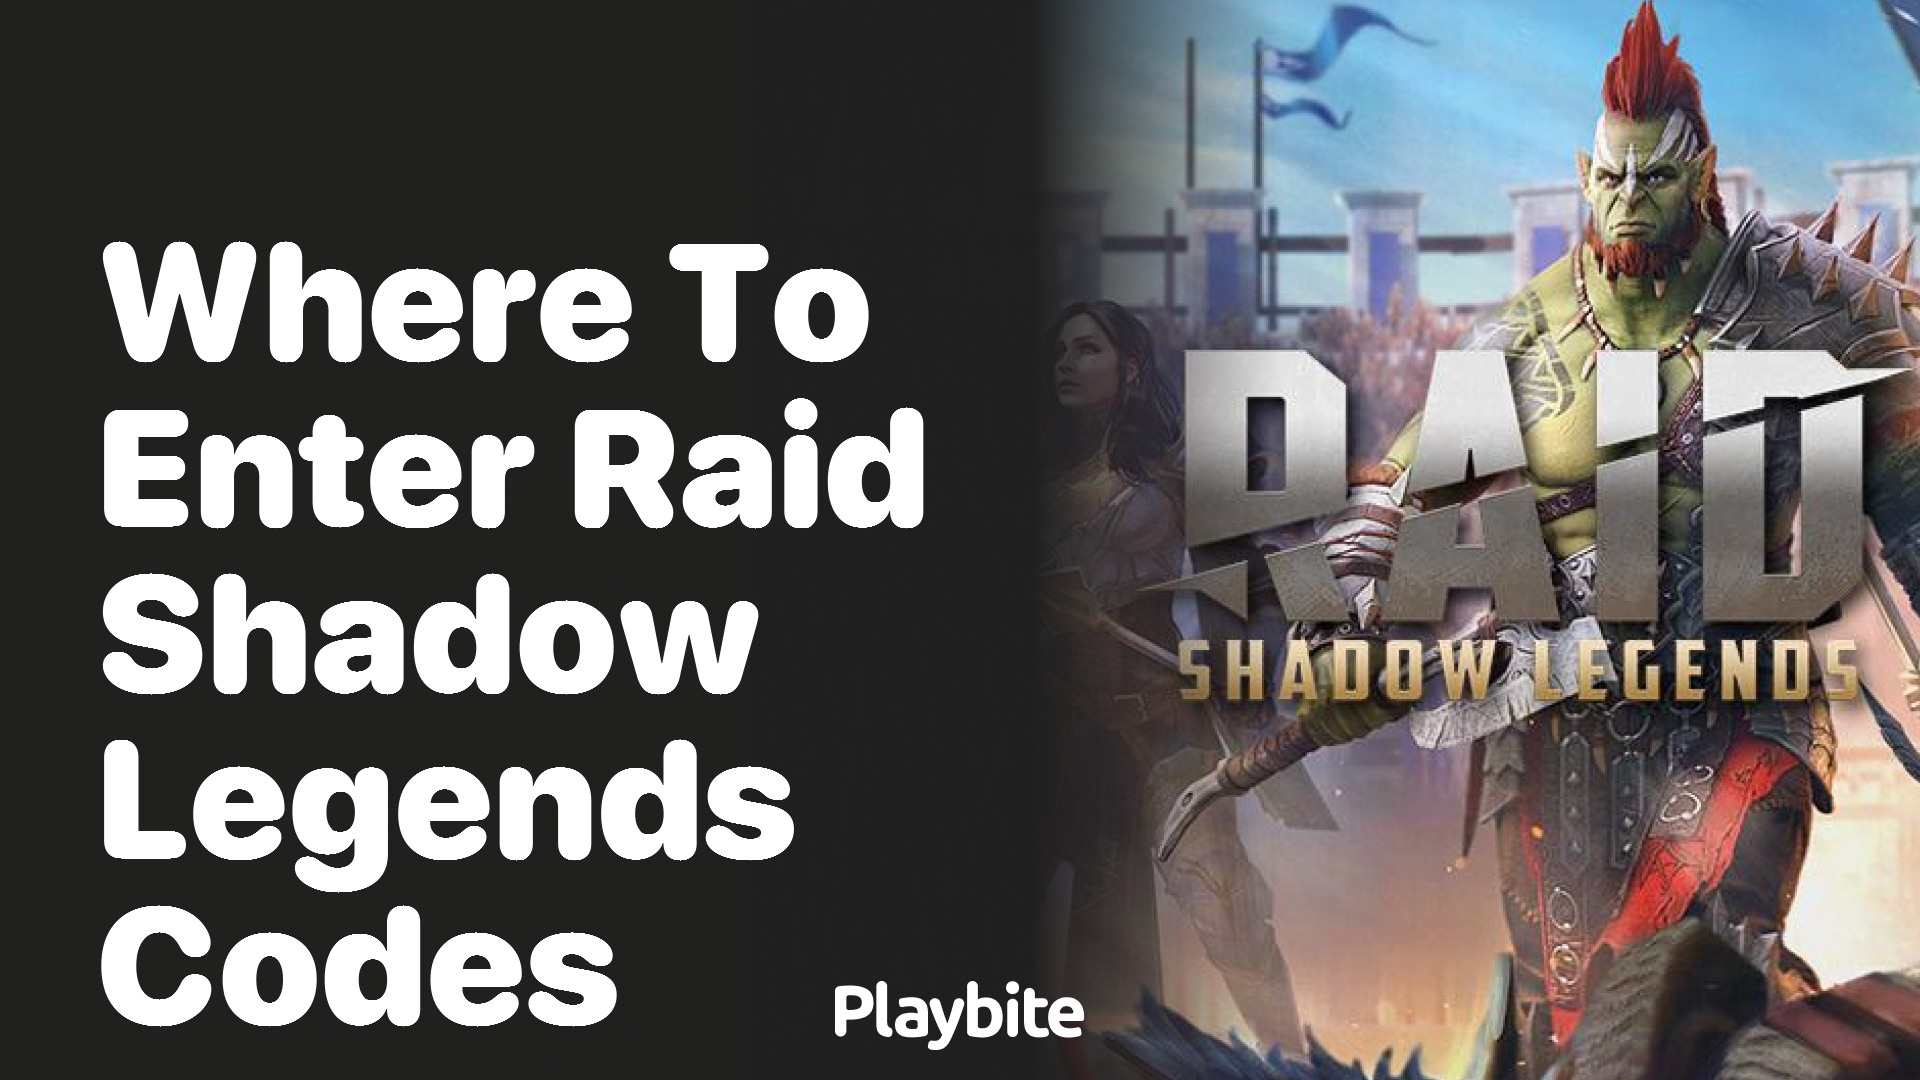 Where to Enter Raid Shadow Legends Codes: A Quick Guide